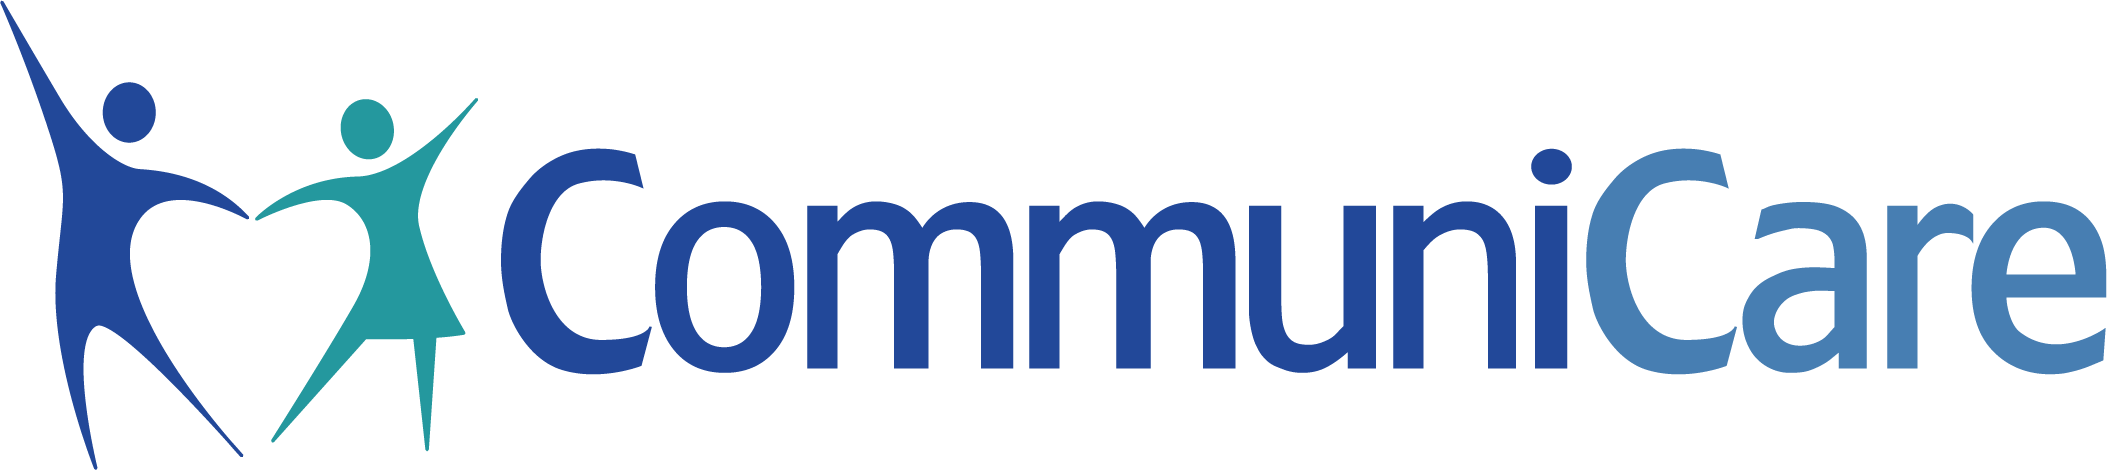 Communicare Health Center logo